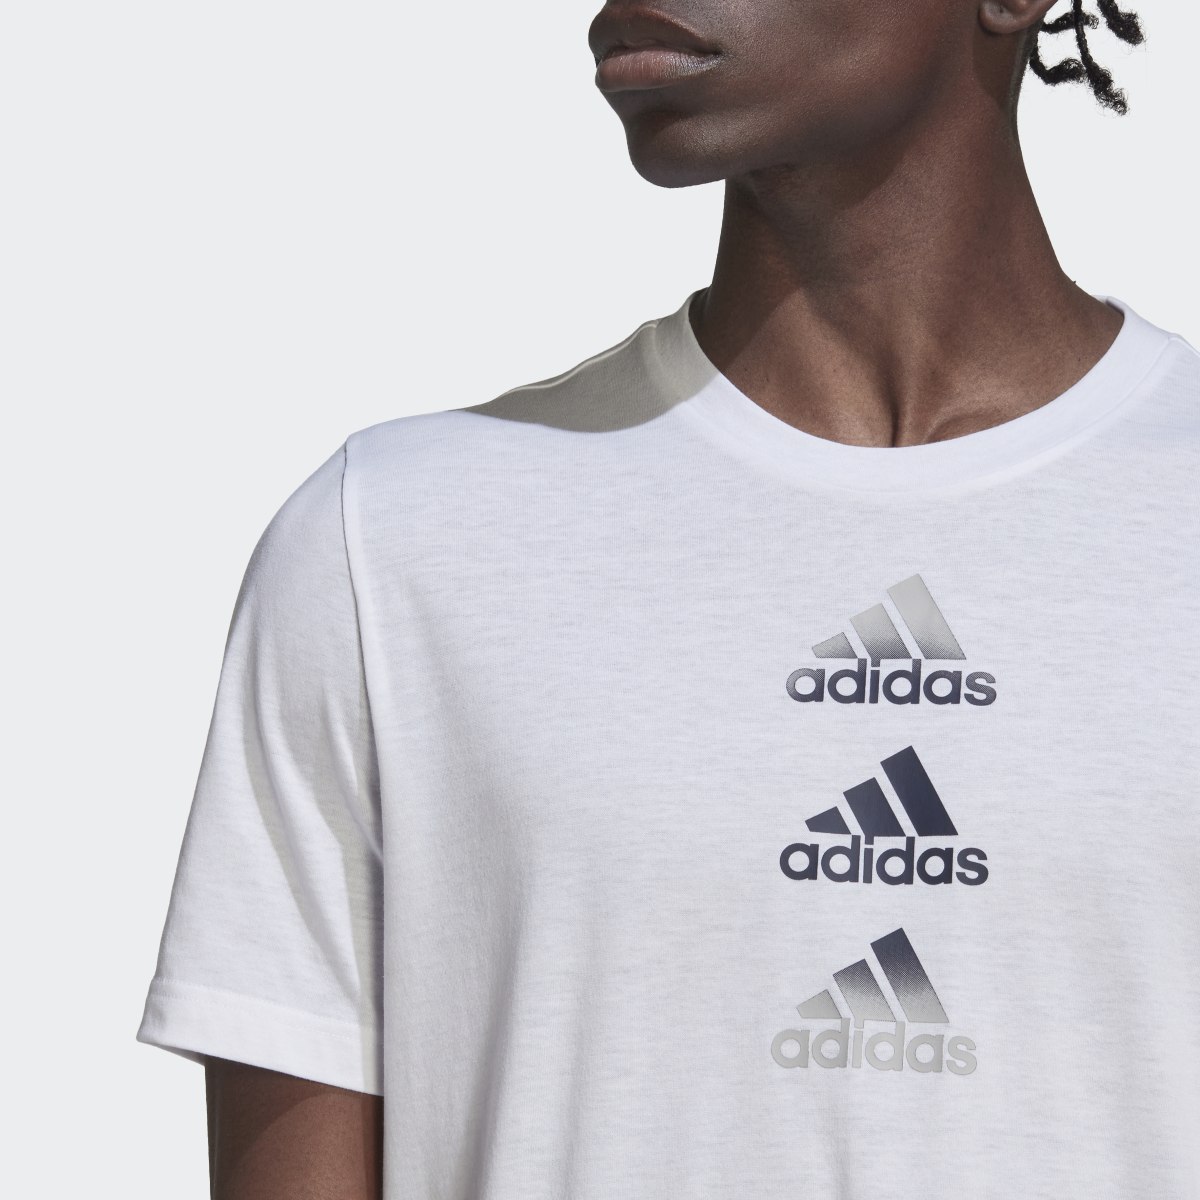 Adidas T-shirt Designed to Move. 6